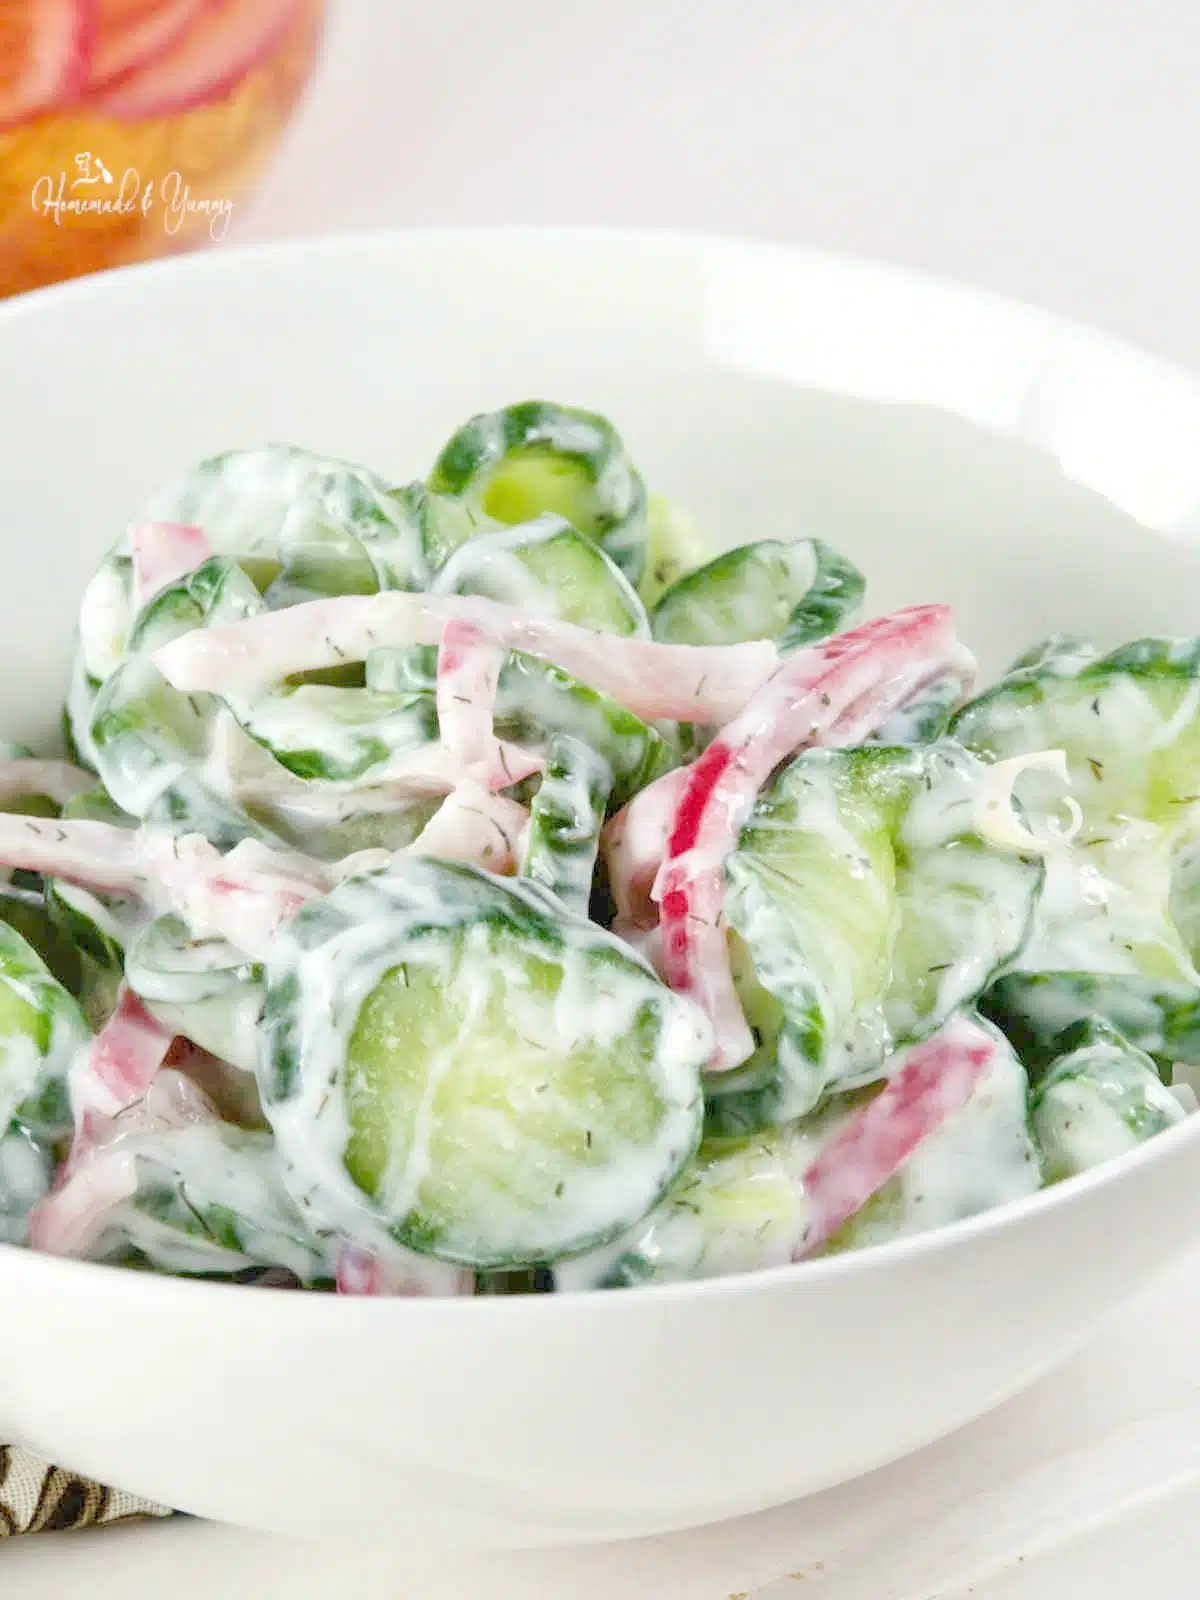 Creamy cucumber and onion salad with no mayo.